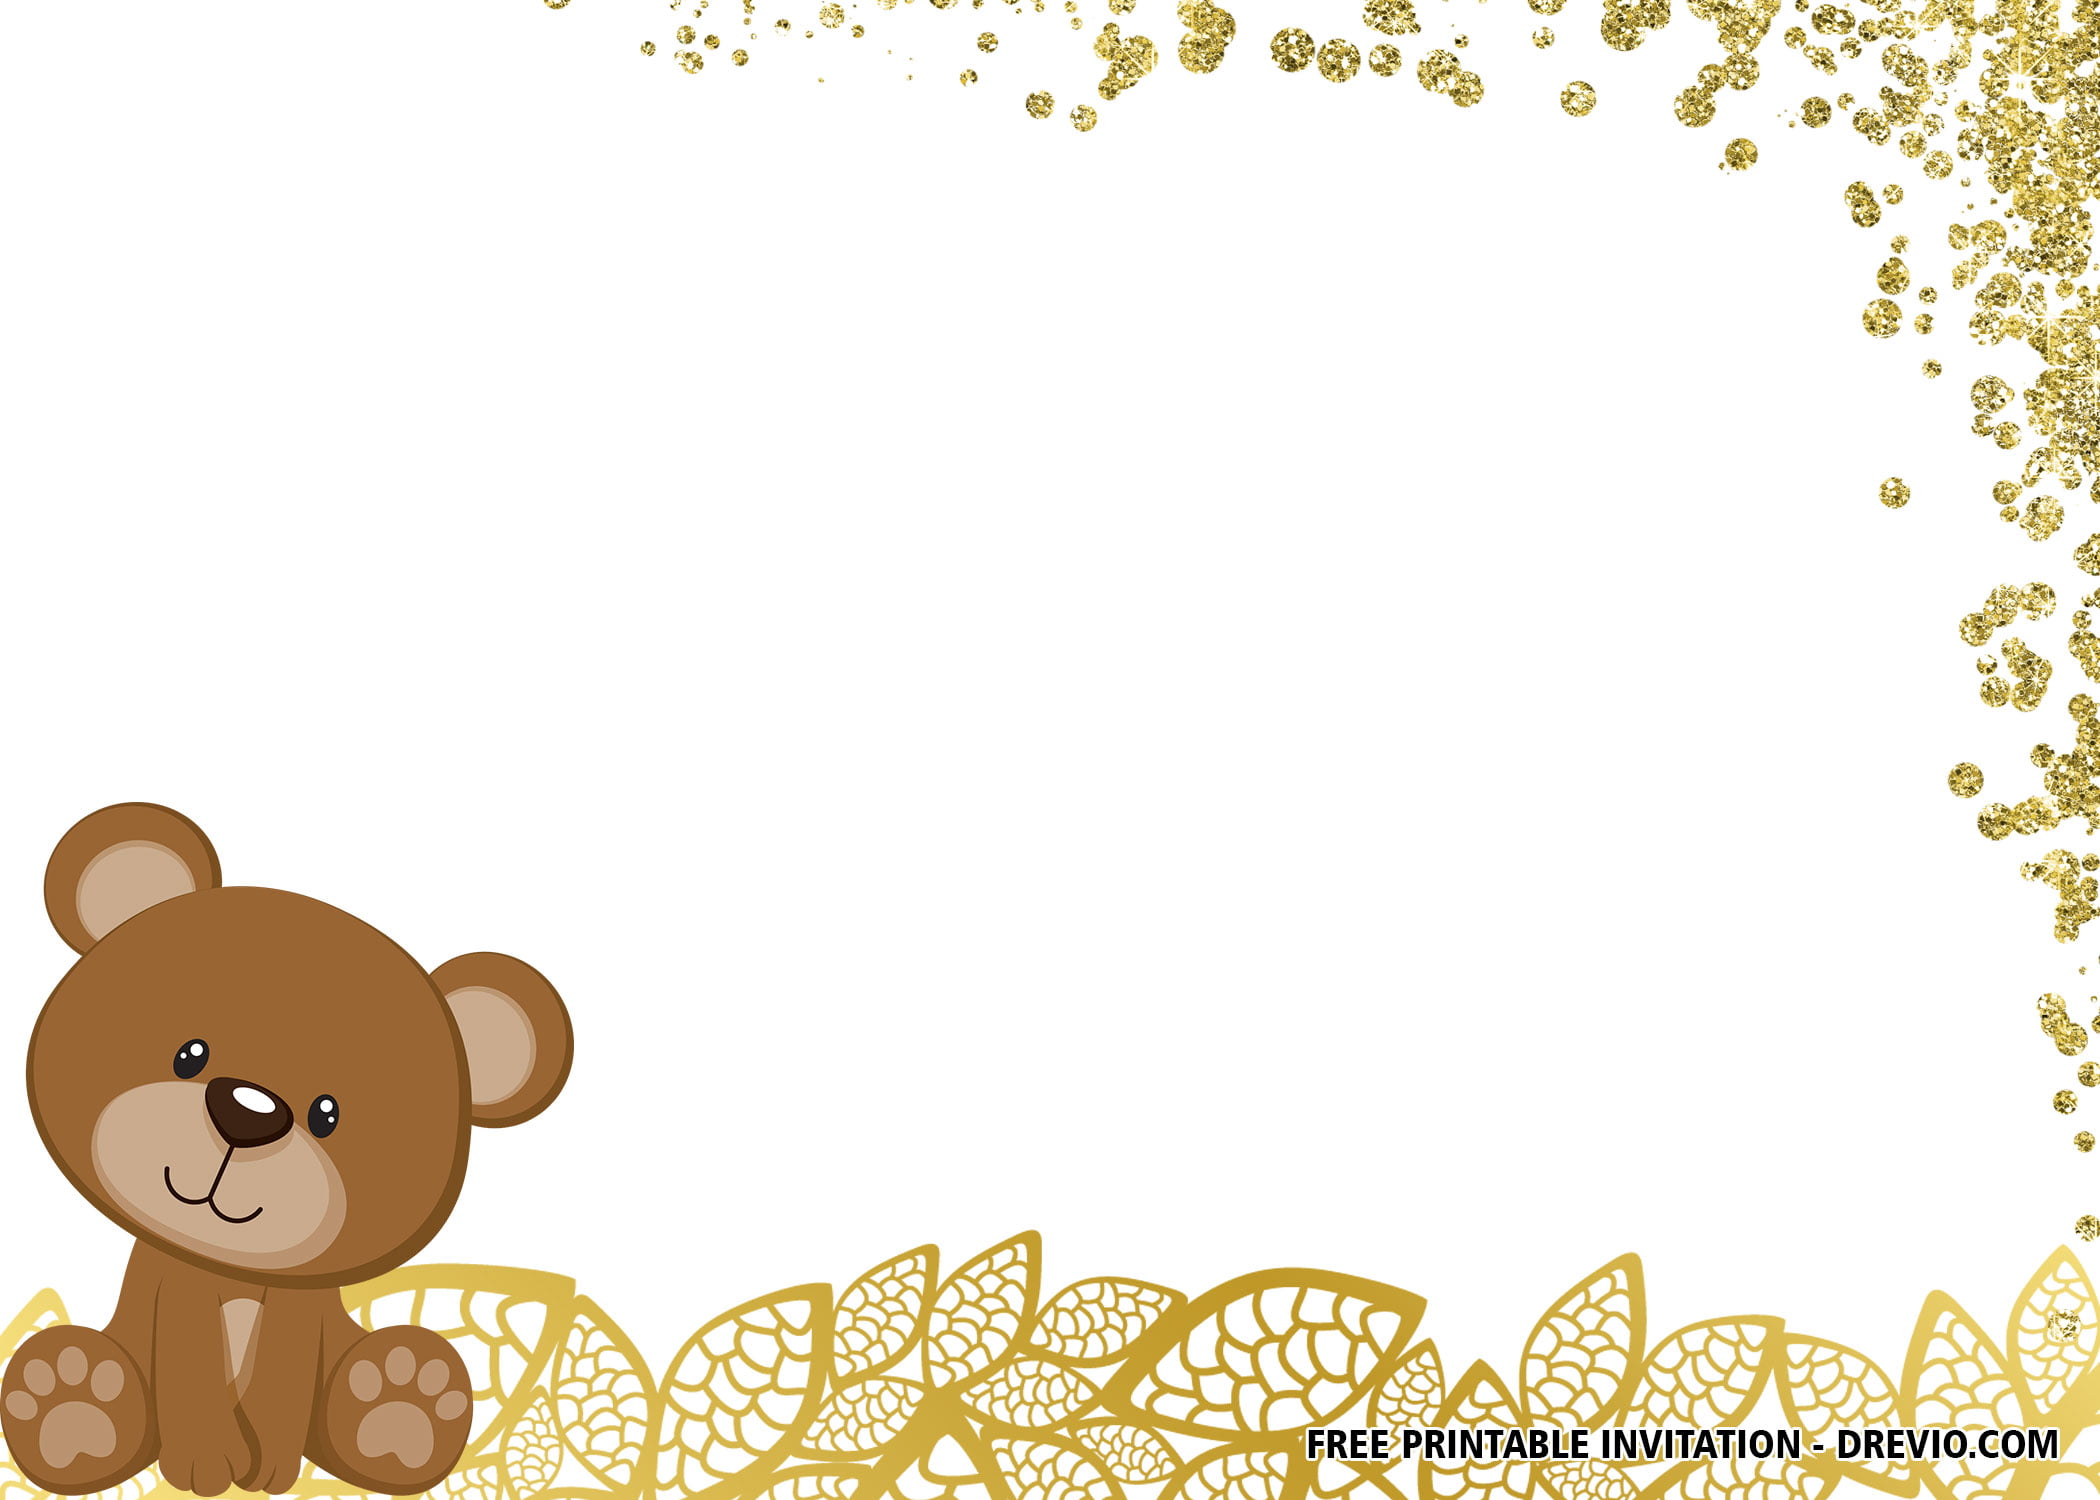 FREE Teddy Bear Invitation Templates Download Hundreds FREE PRINTABLE Birthday Invitation